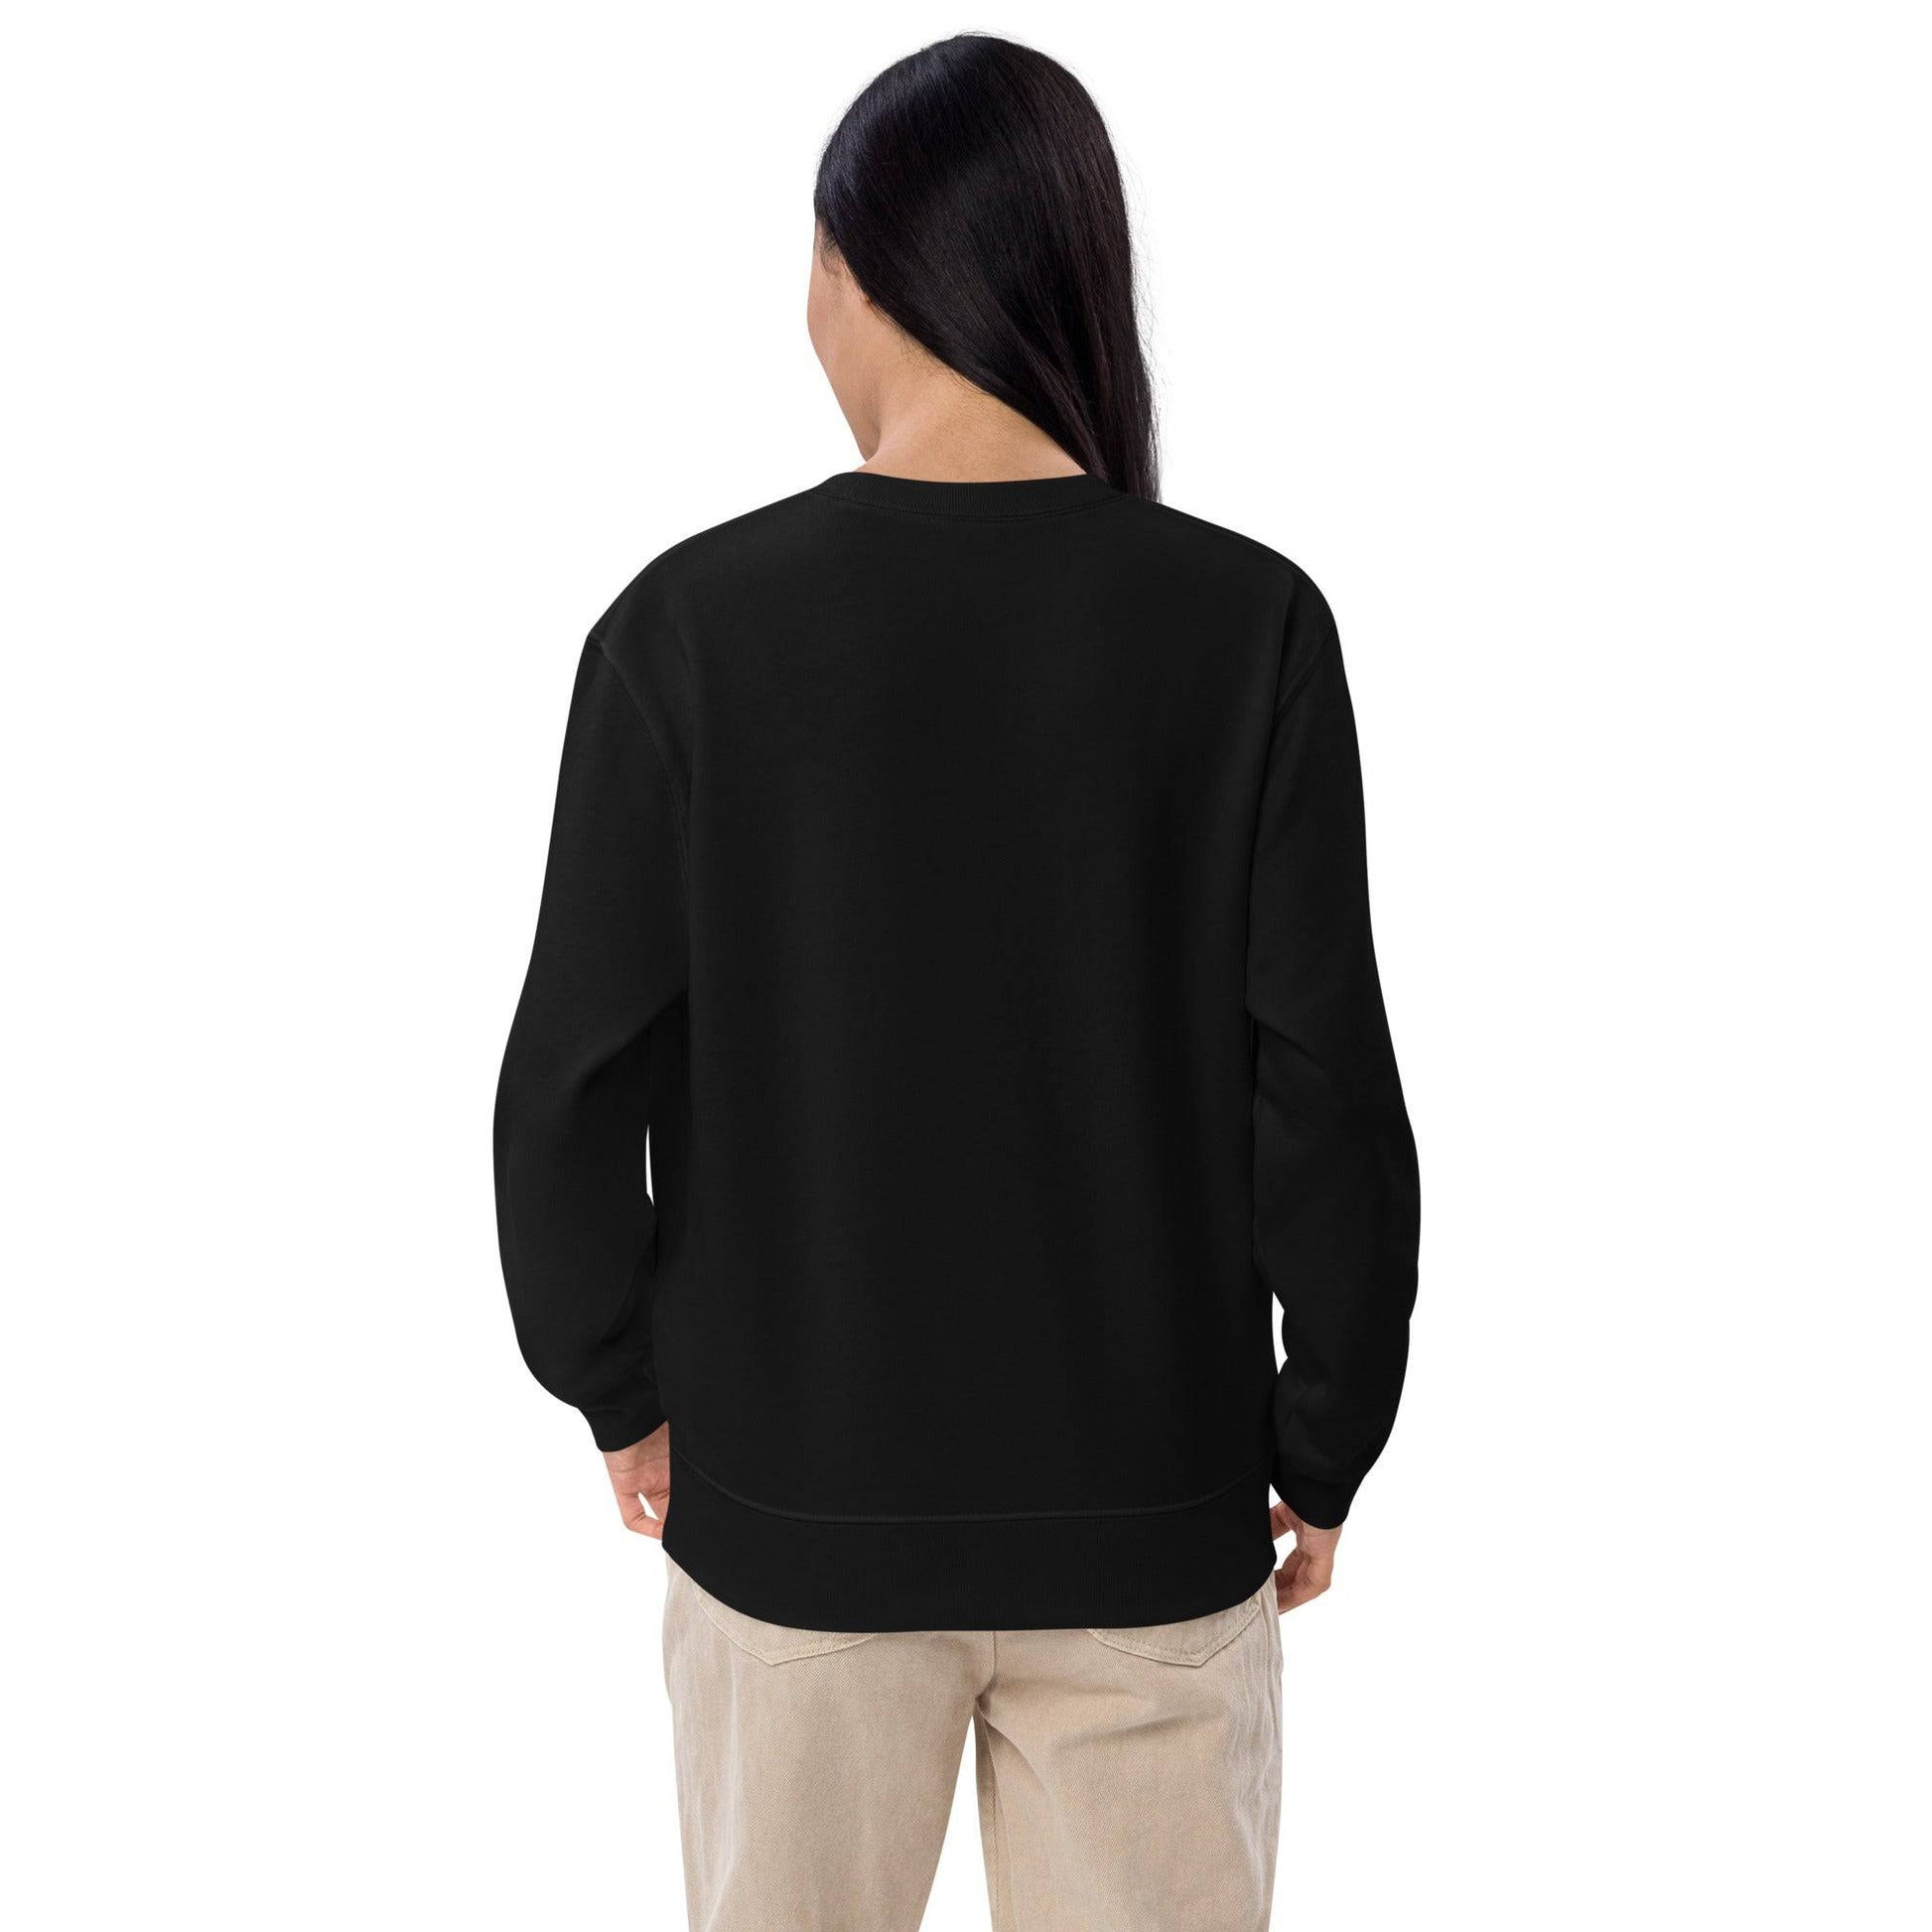 Unisex french terry sweatshirt - Pixel Gallery